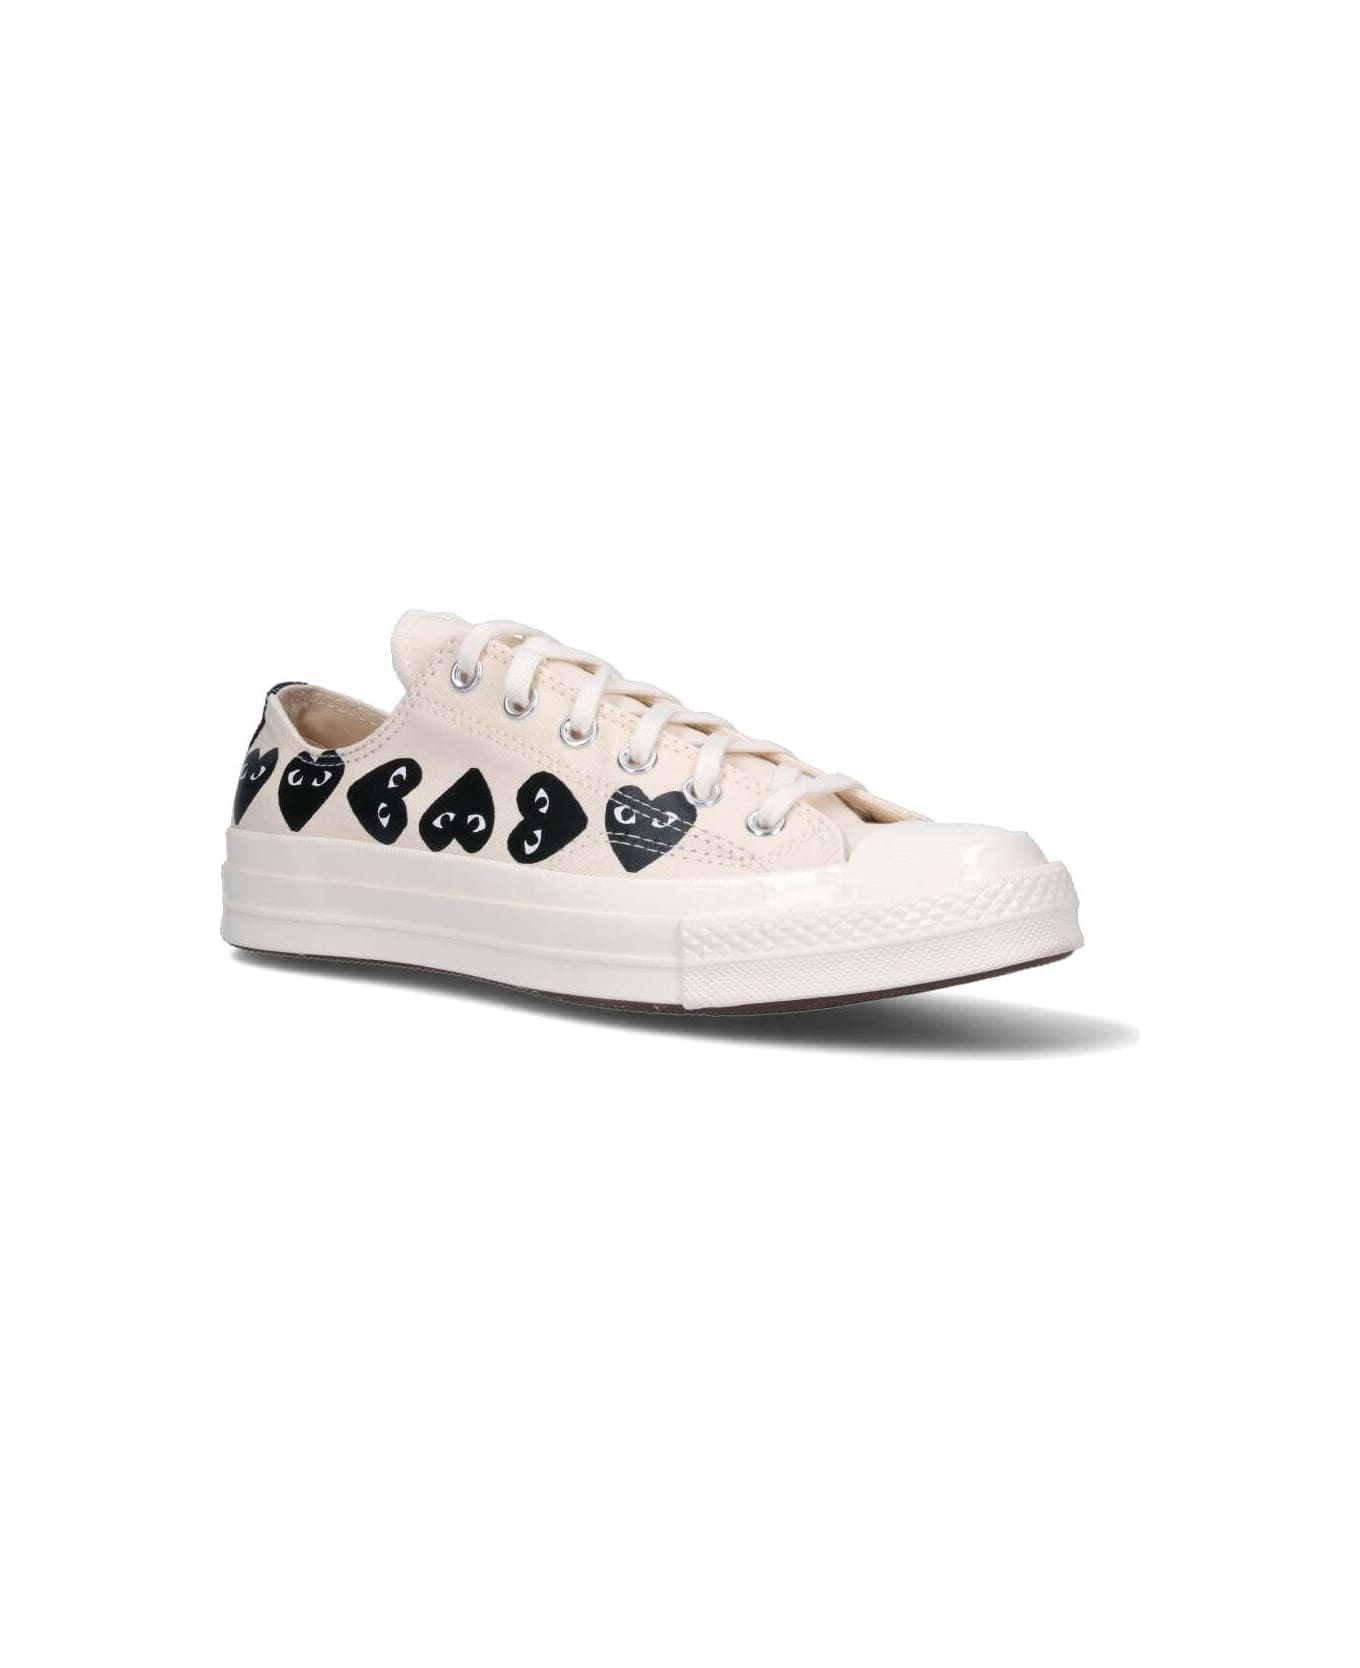 Comme des Garçons Play Low 'converse Multi Heart Chuck 70' Sneakers - Bianco